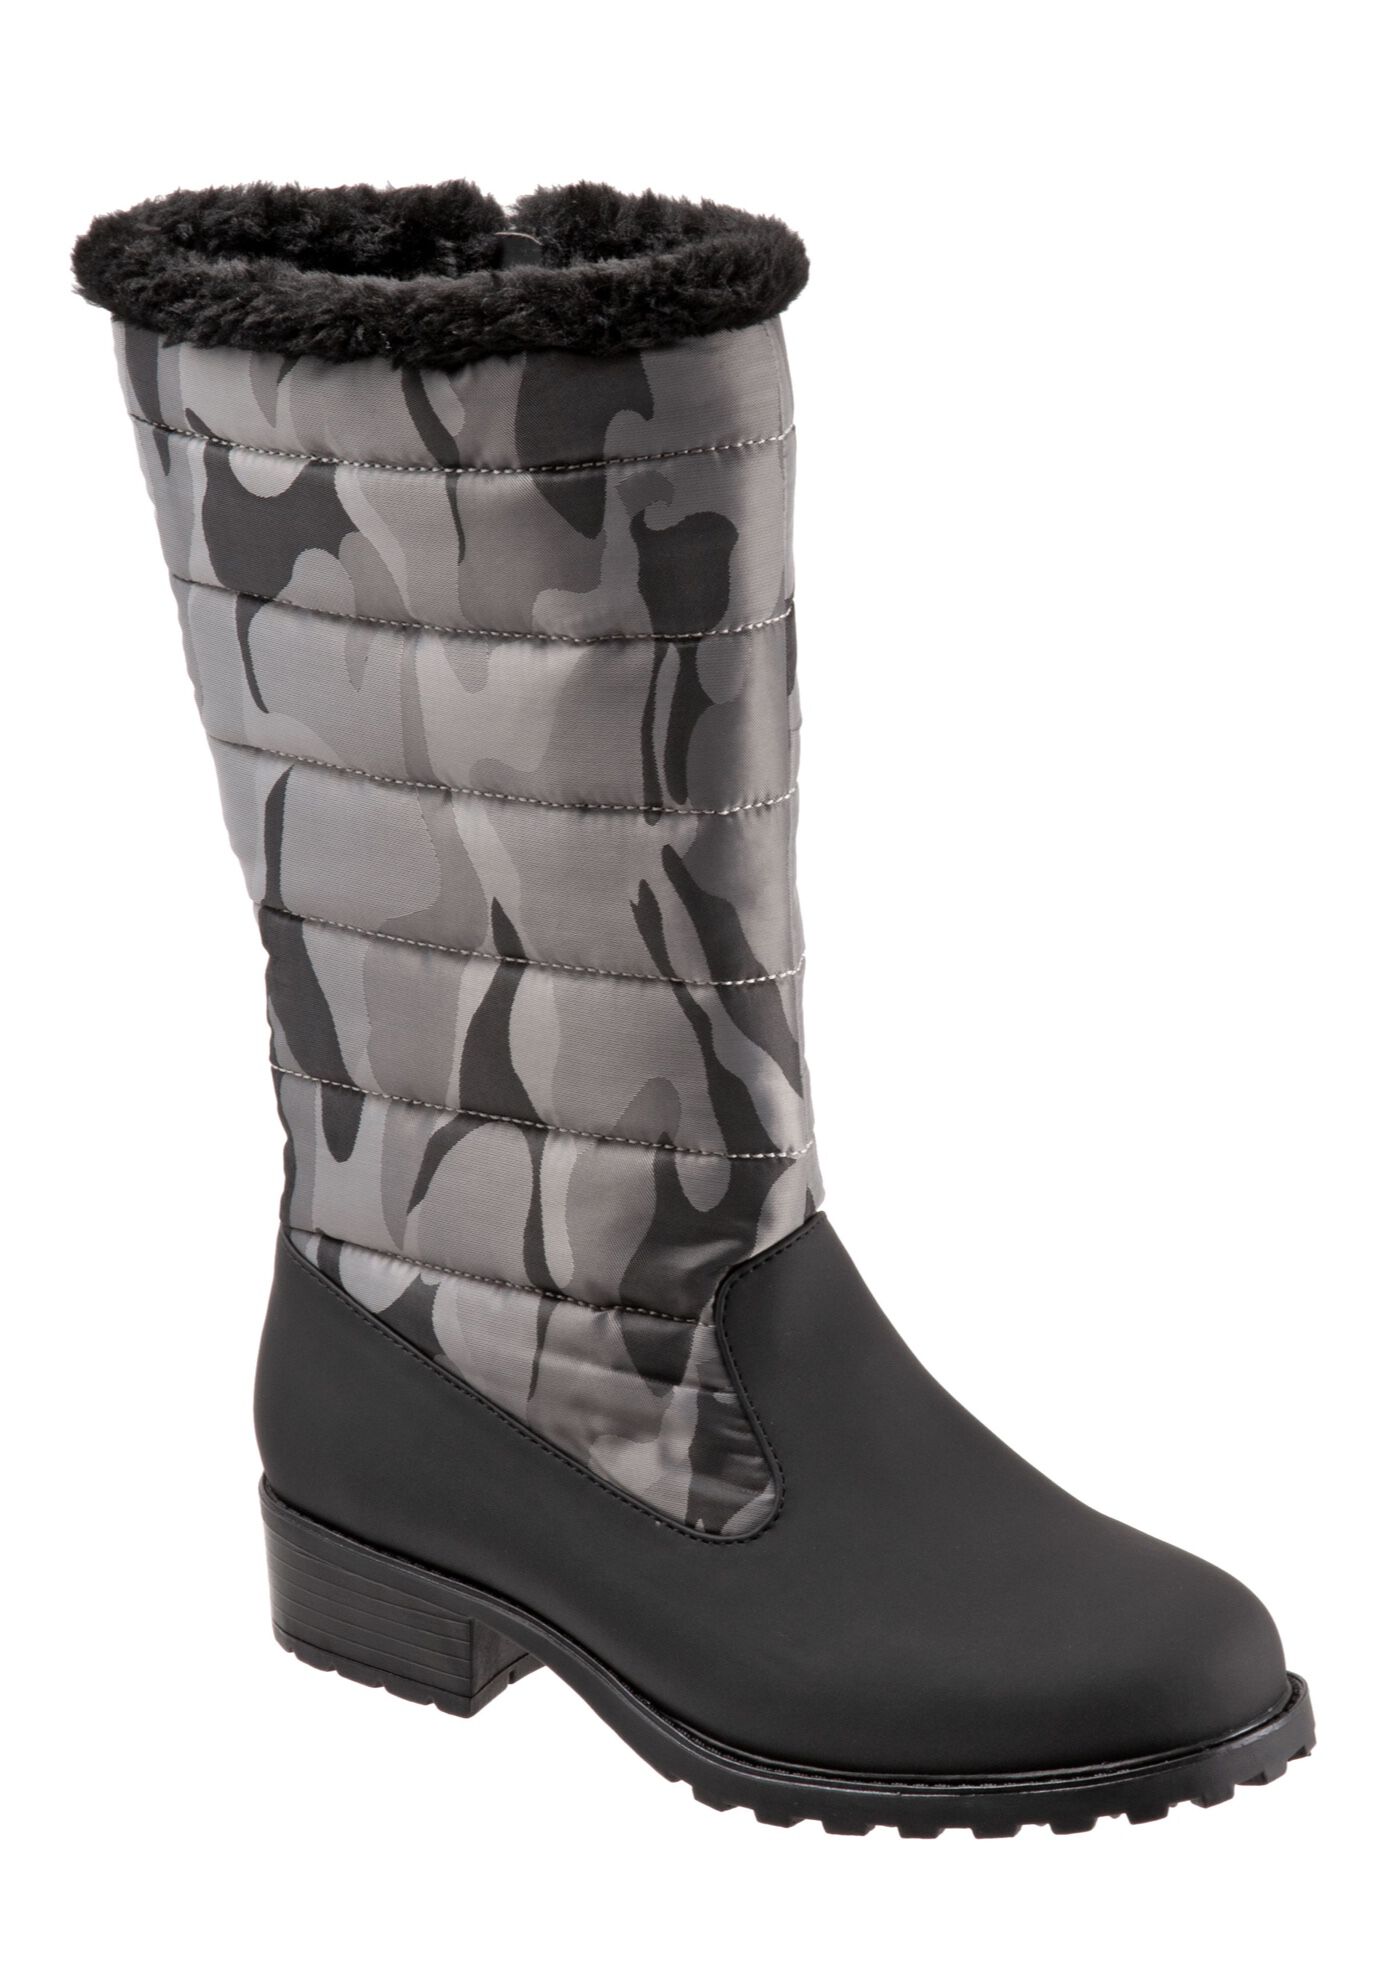 Extra Wide Width Women's Benji High Boot by Trotters in Black Dark Camo (Size 10 WW)